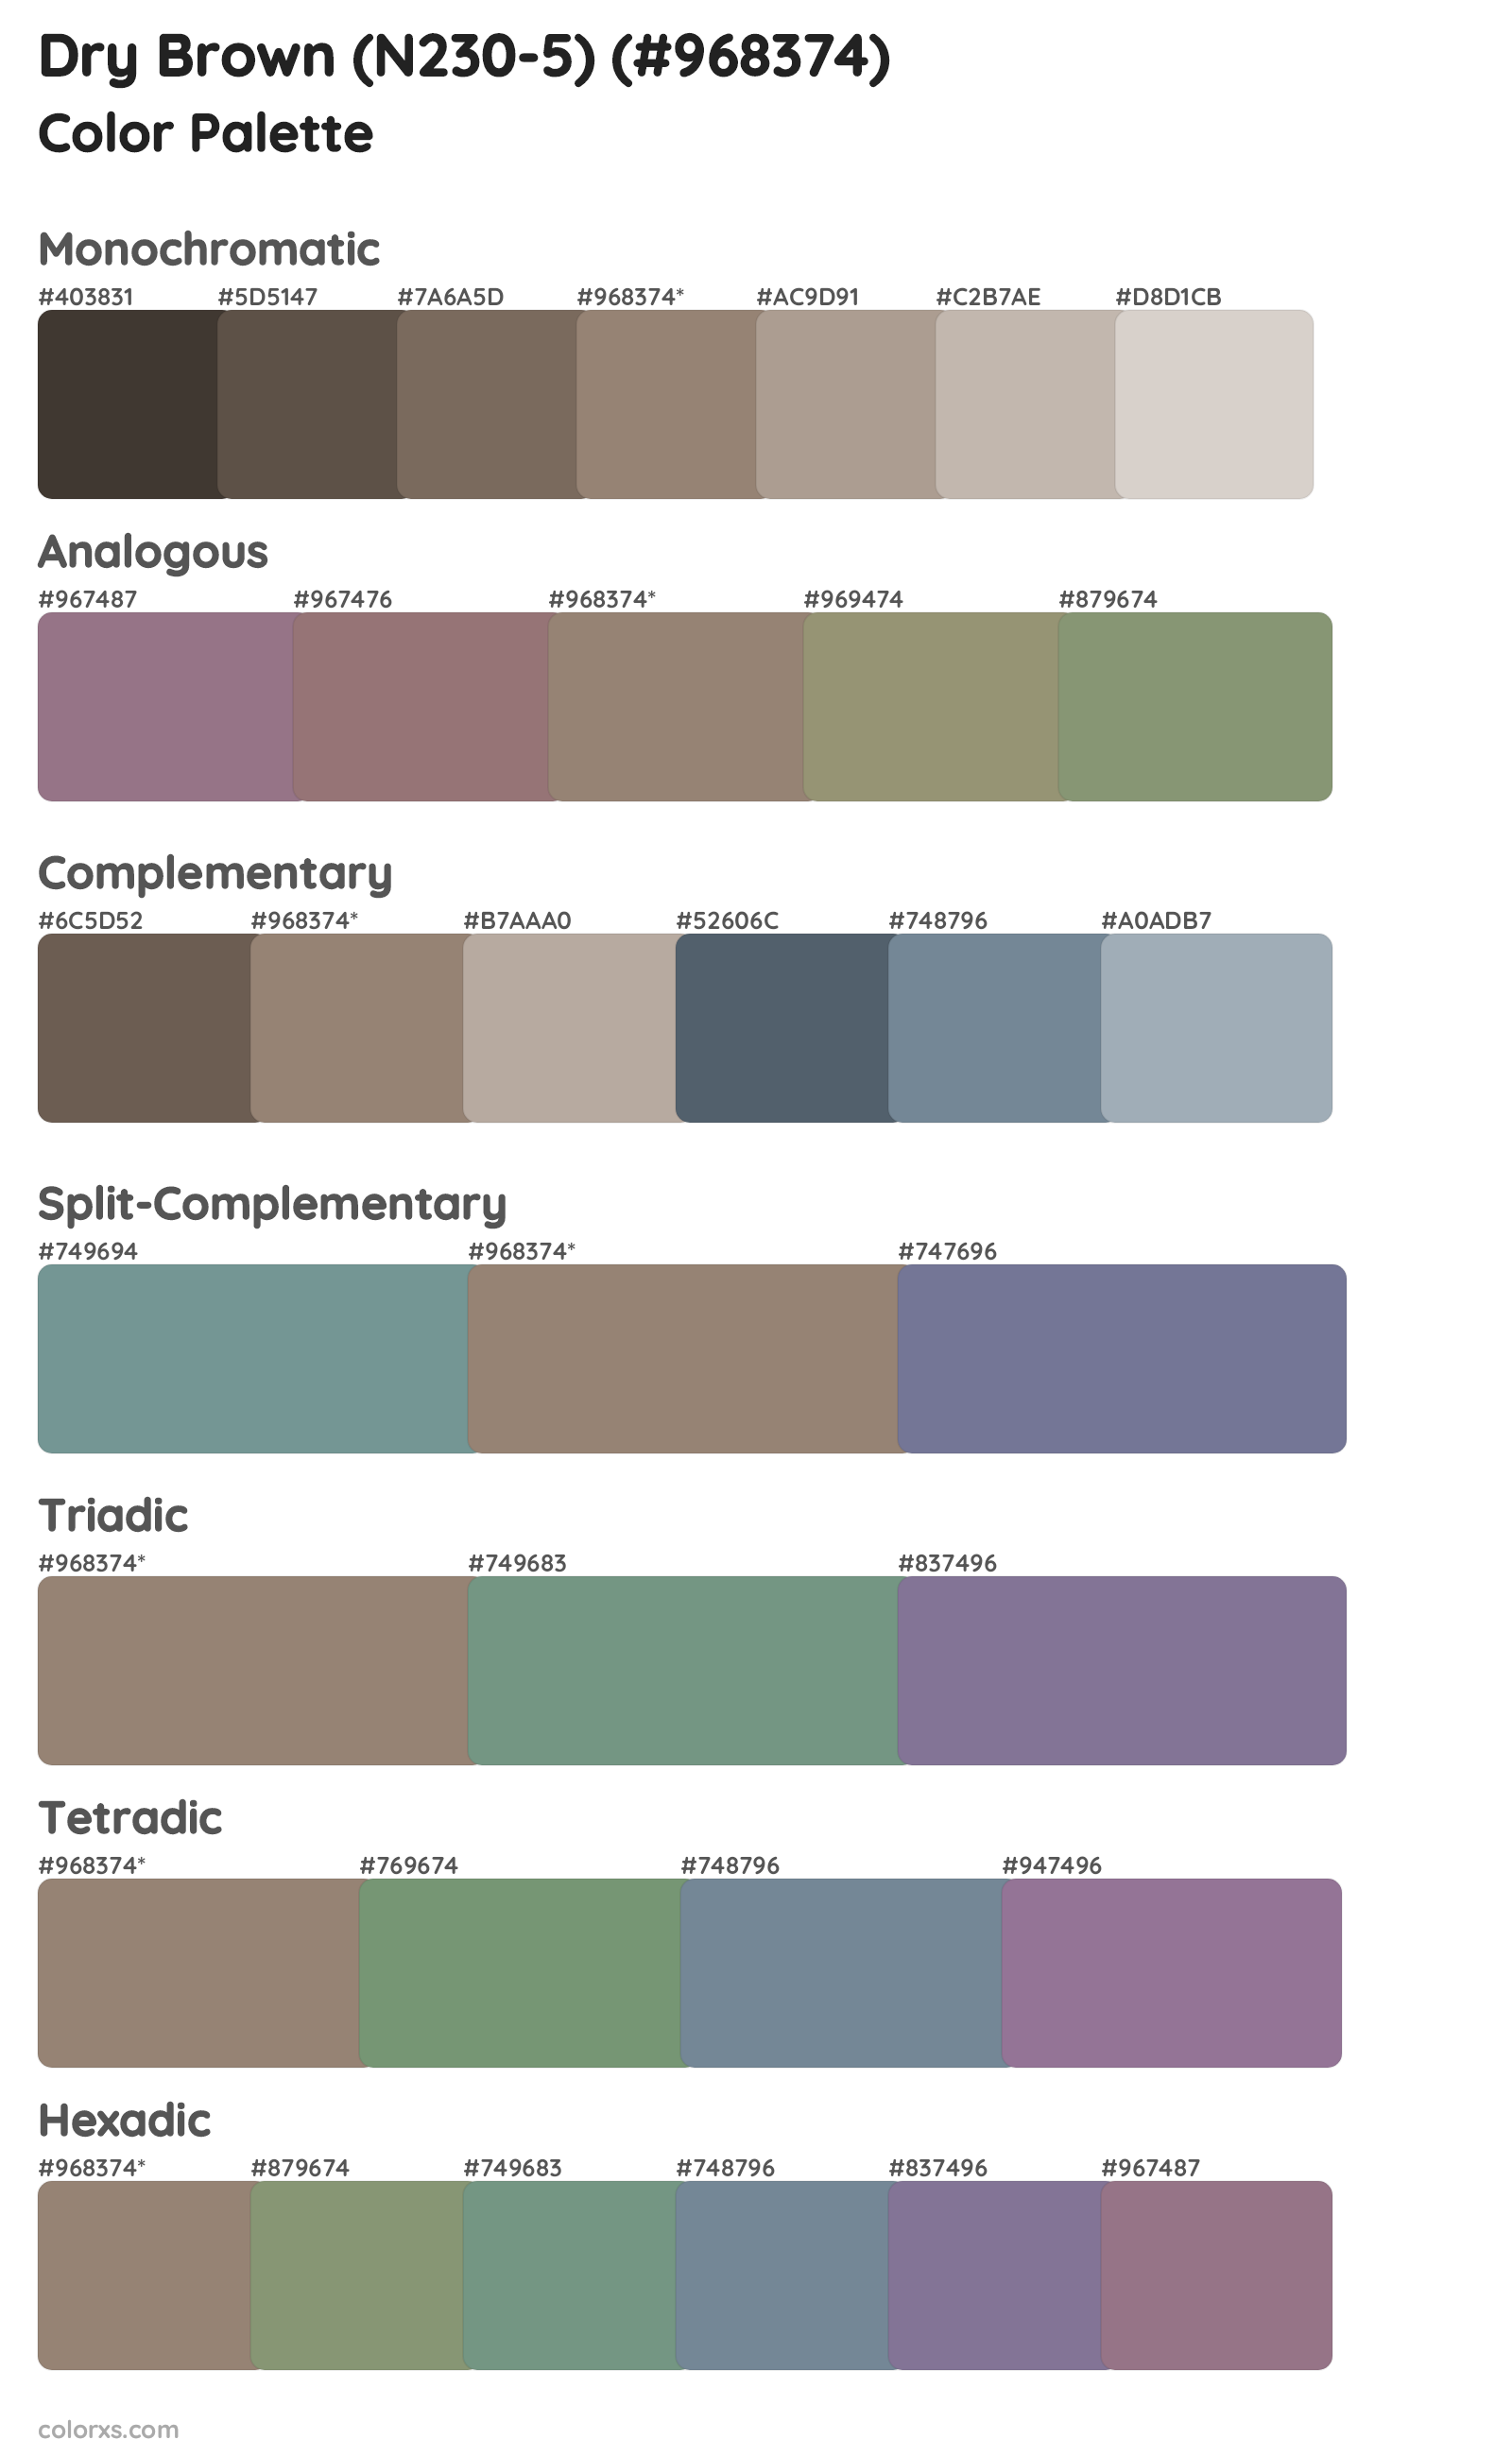 Dry Brown (N230-5) Color Scheme Palettes